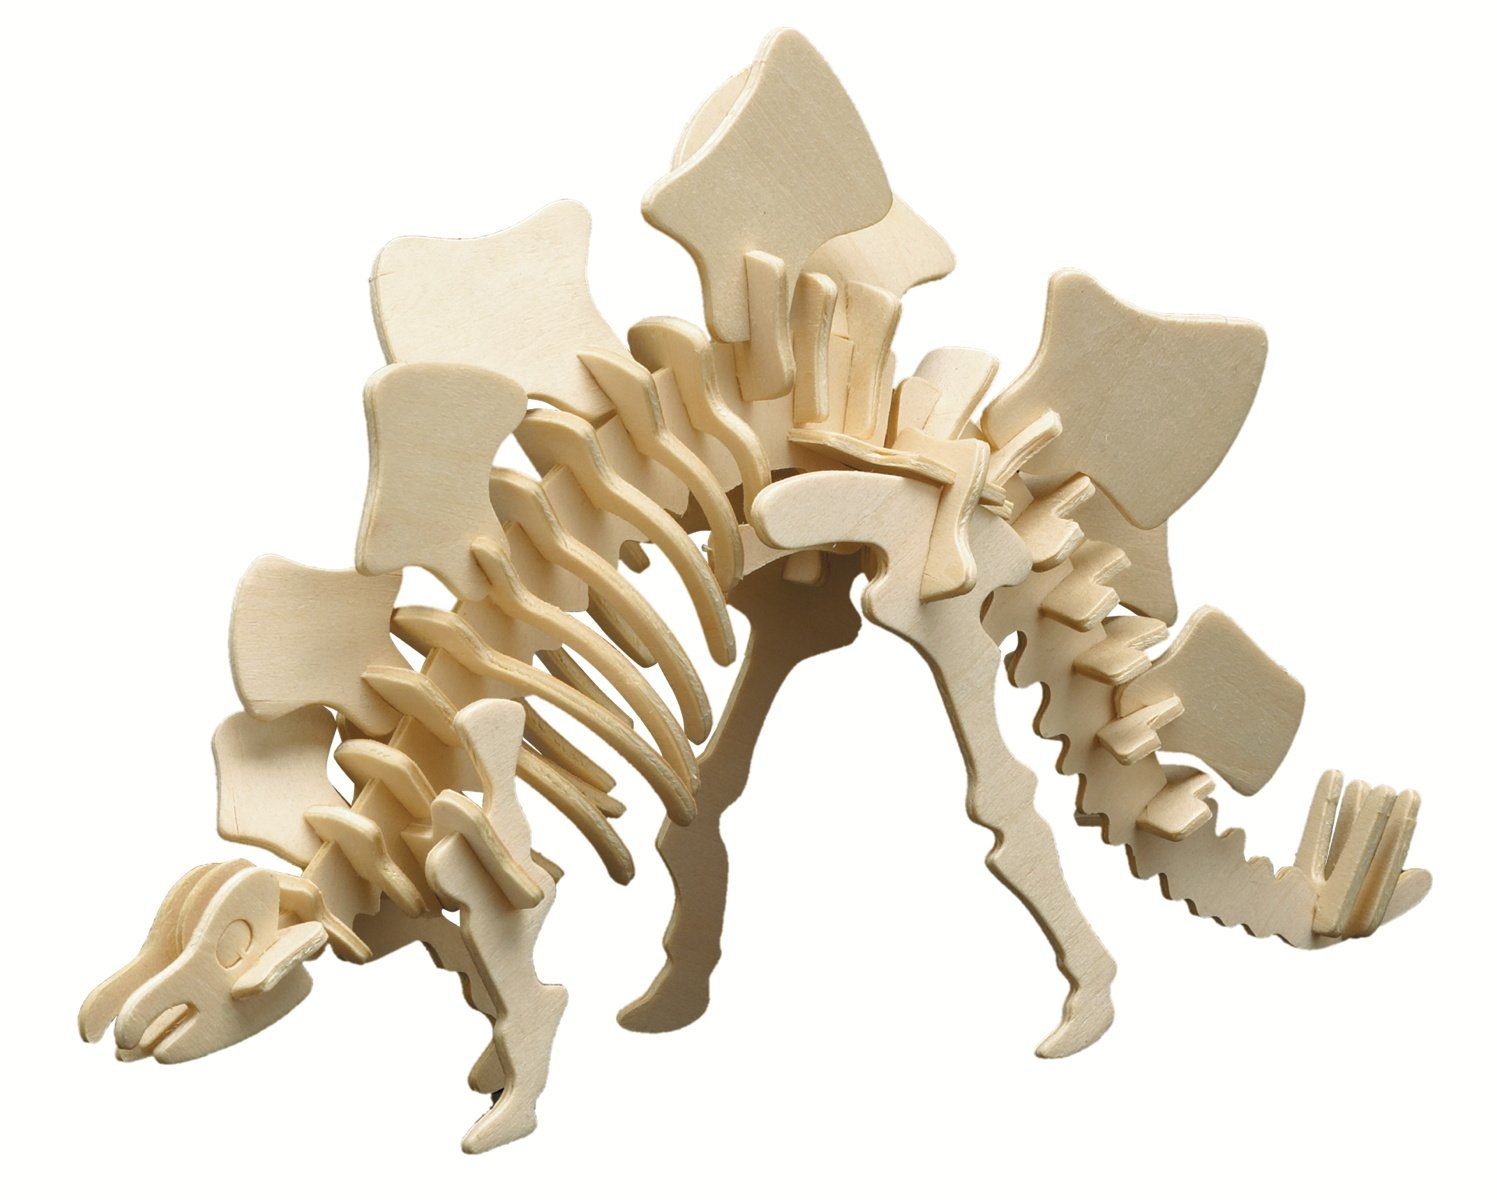 44 Pebaro 3D-Puzzle Puzzleteile 856/5, Stegosaurus, Holzbausatz